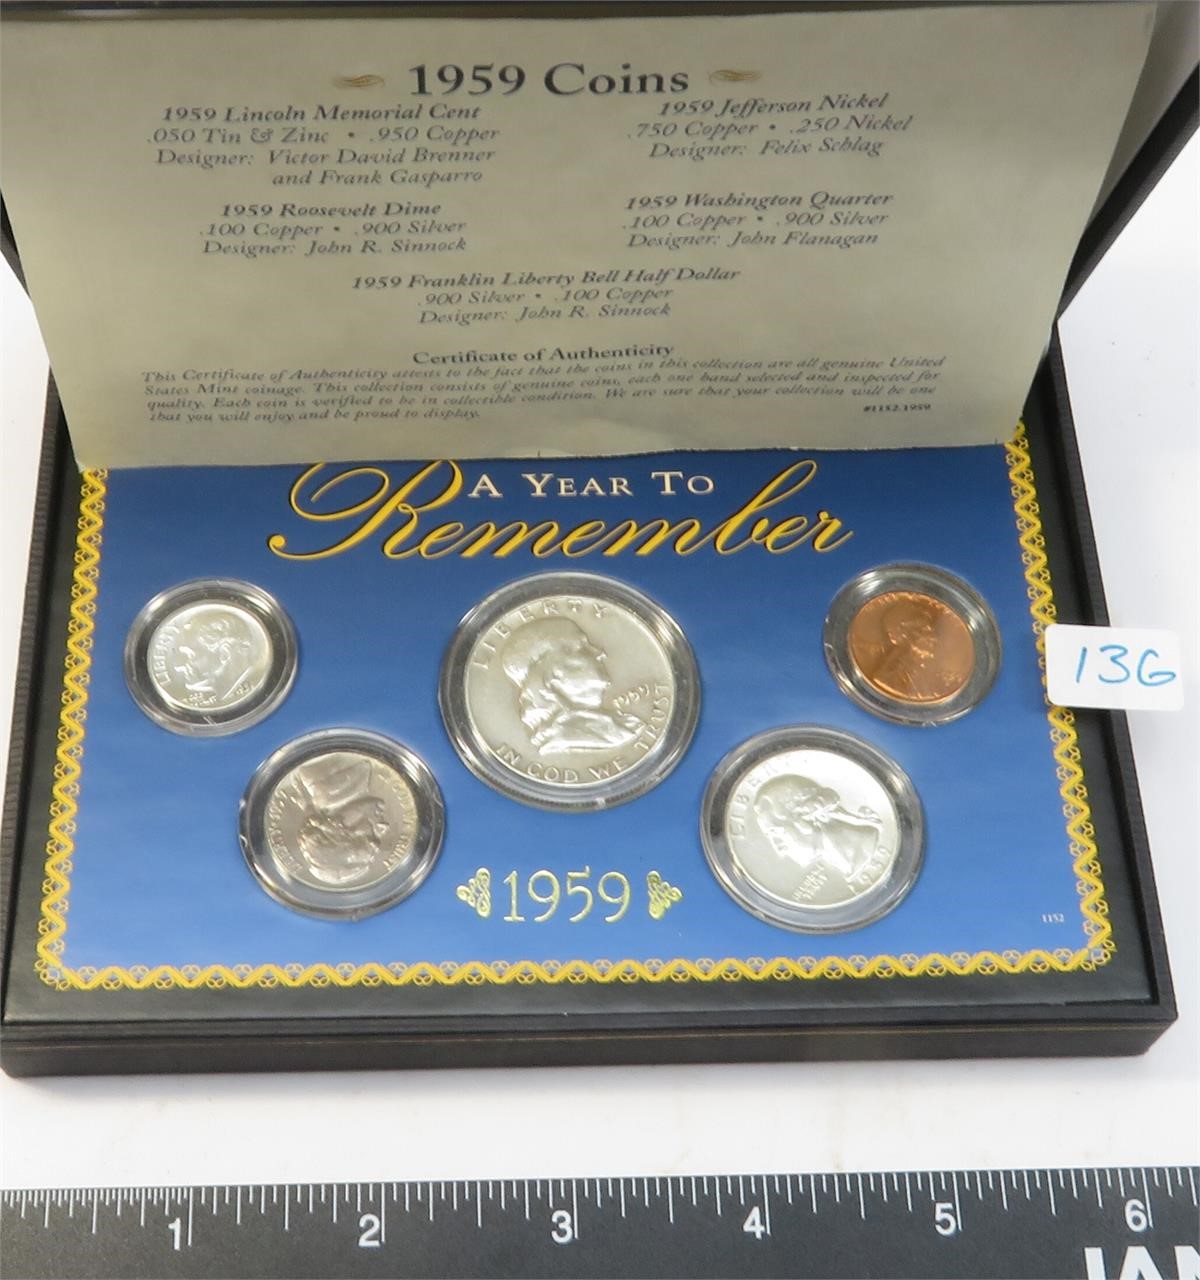 1959 Coin Display. $16.29 Melt Value